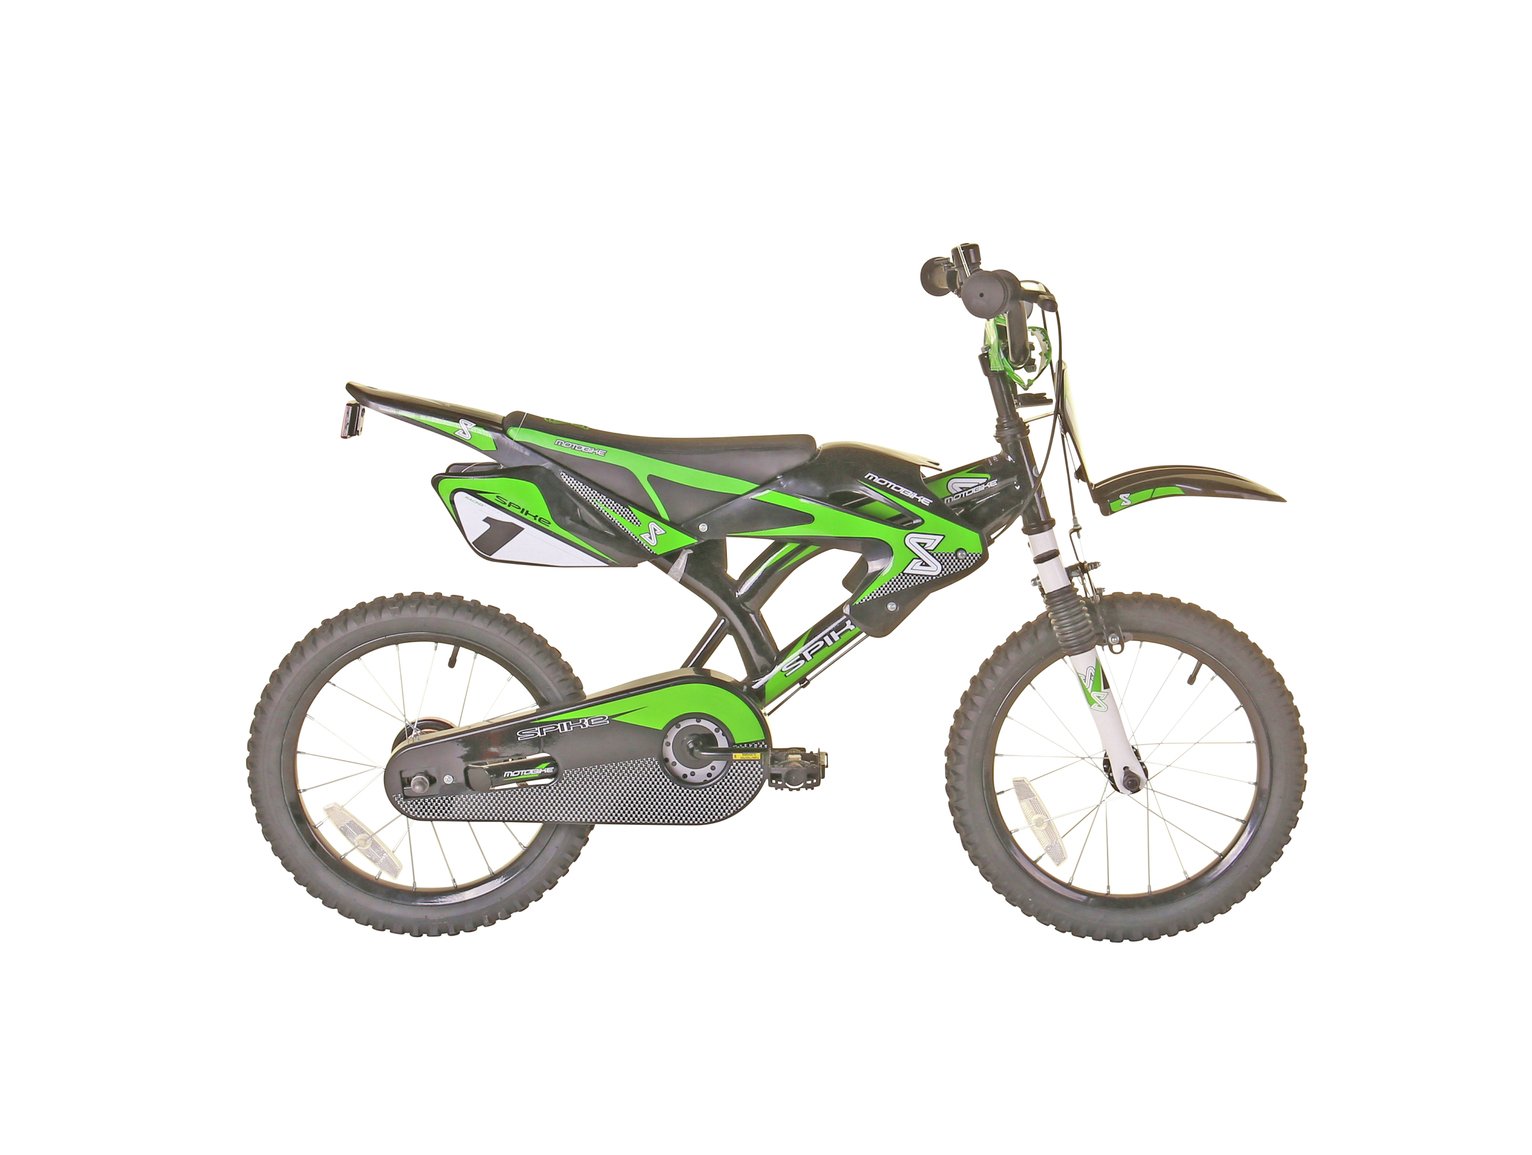 16 inch bike with stabilisers argos